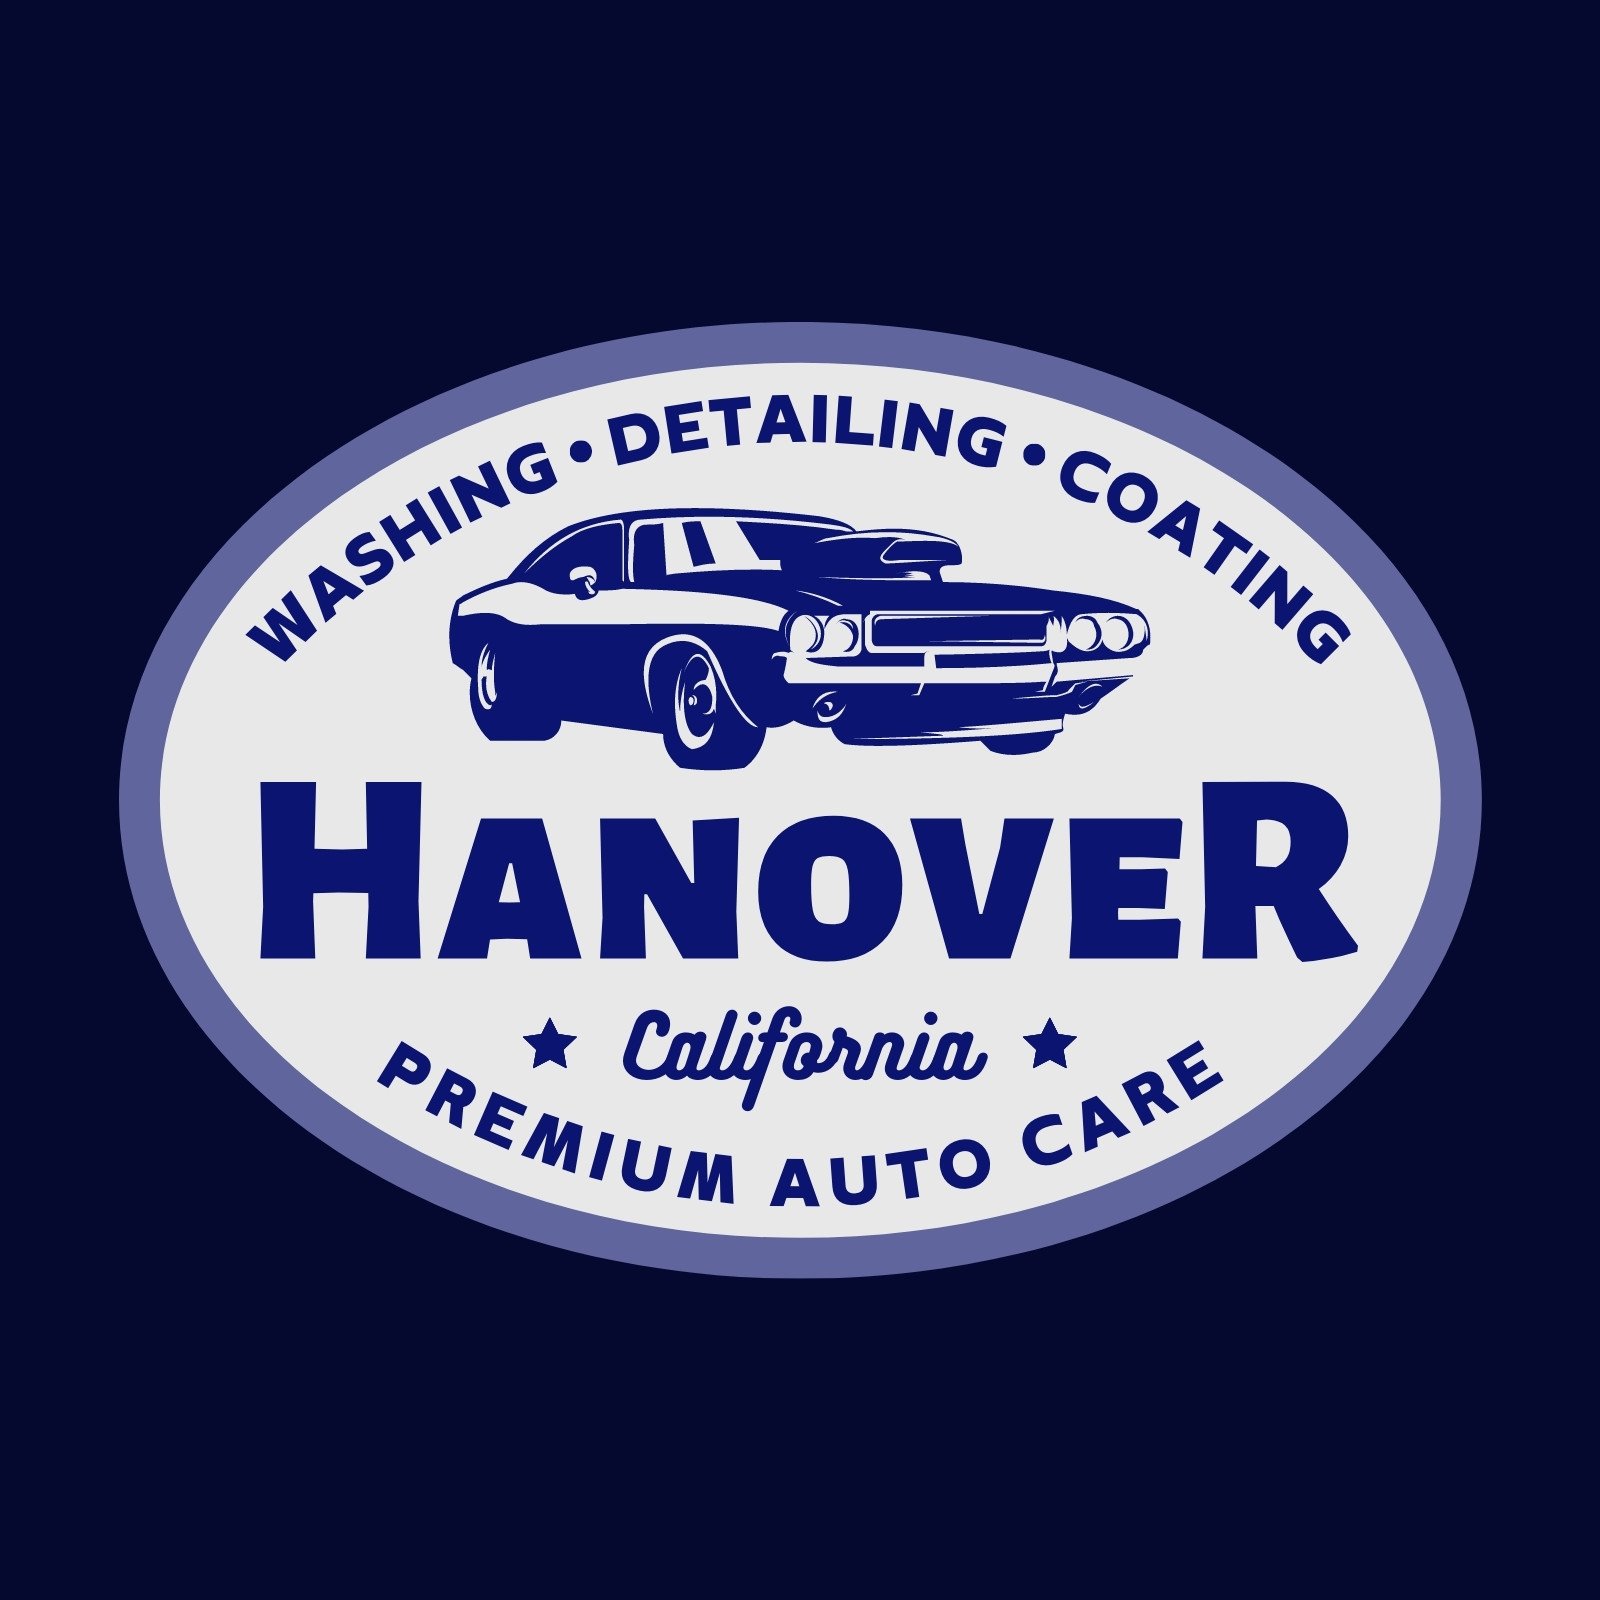 Free and customizable car wash logo templates | Canva